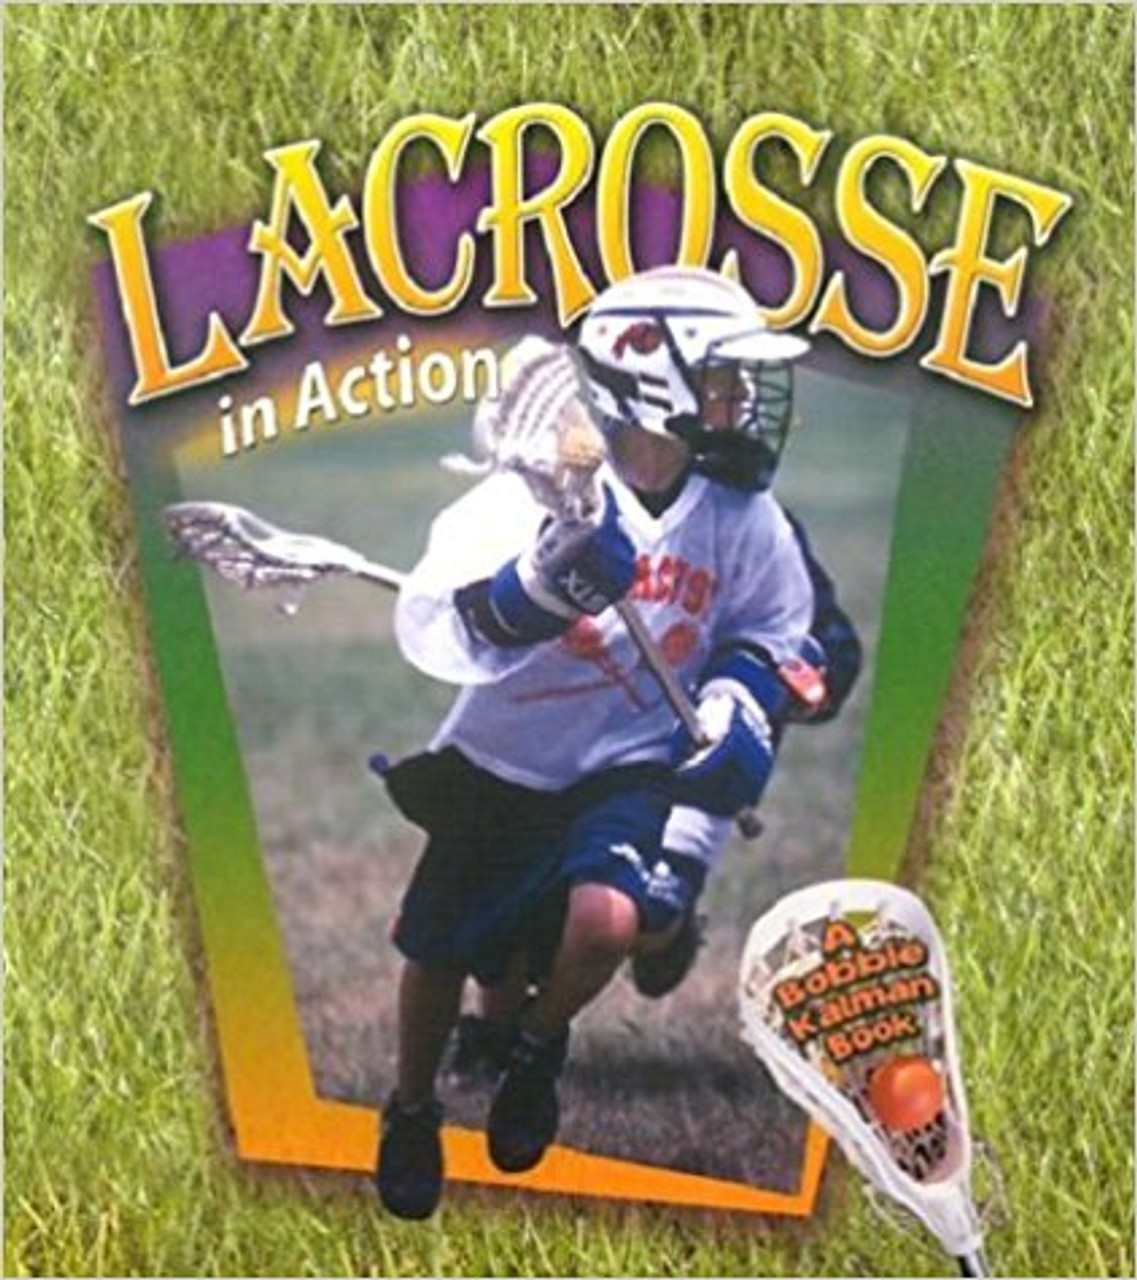 Lacrosse in Action (Paperback) by John Crossingham